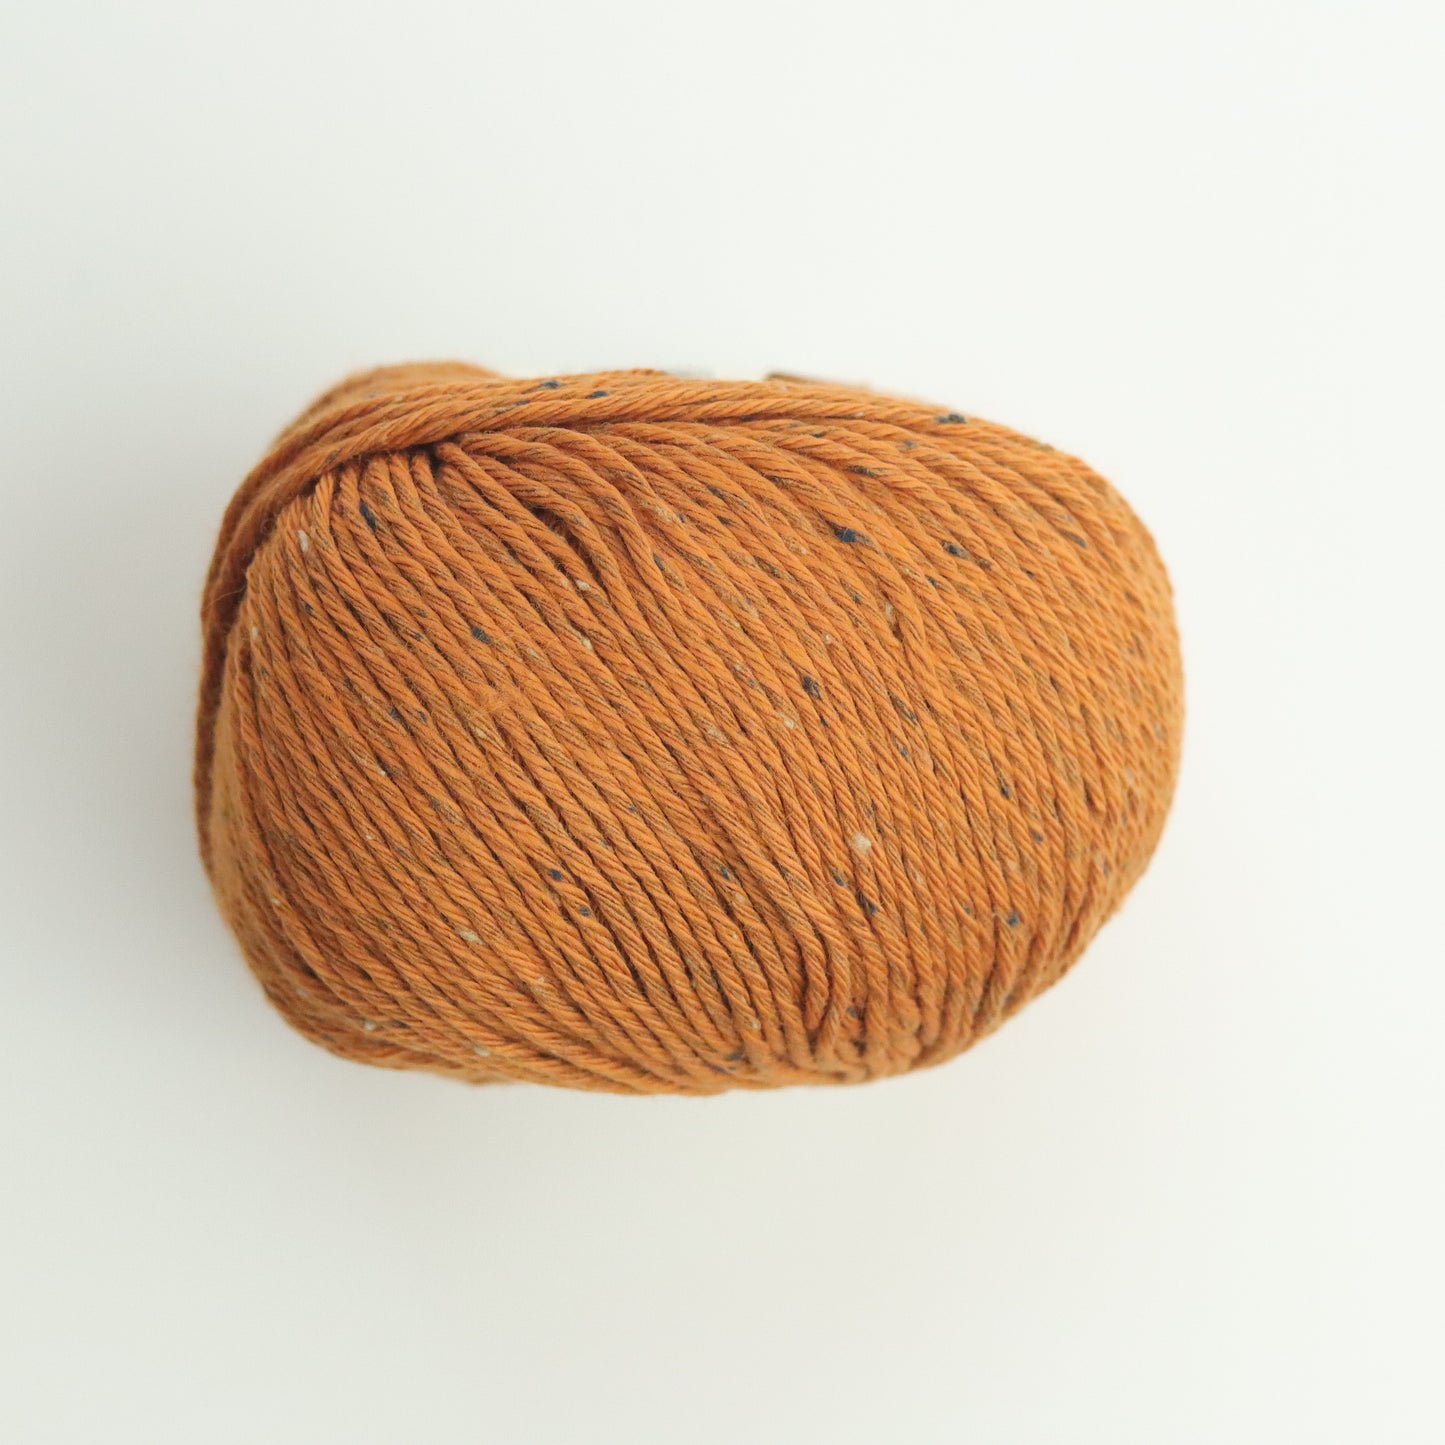 Erika Knight Yarns Gossypium Cotton Tweed | Orange | Cotton Blend Yarn